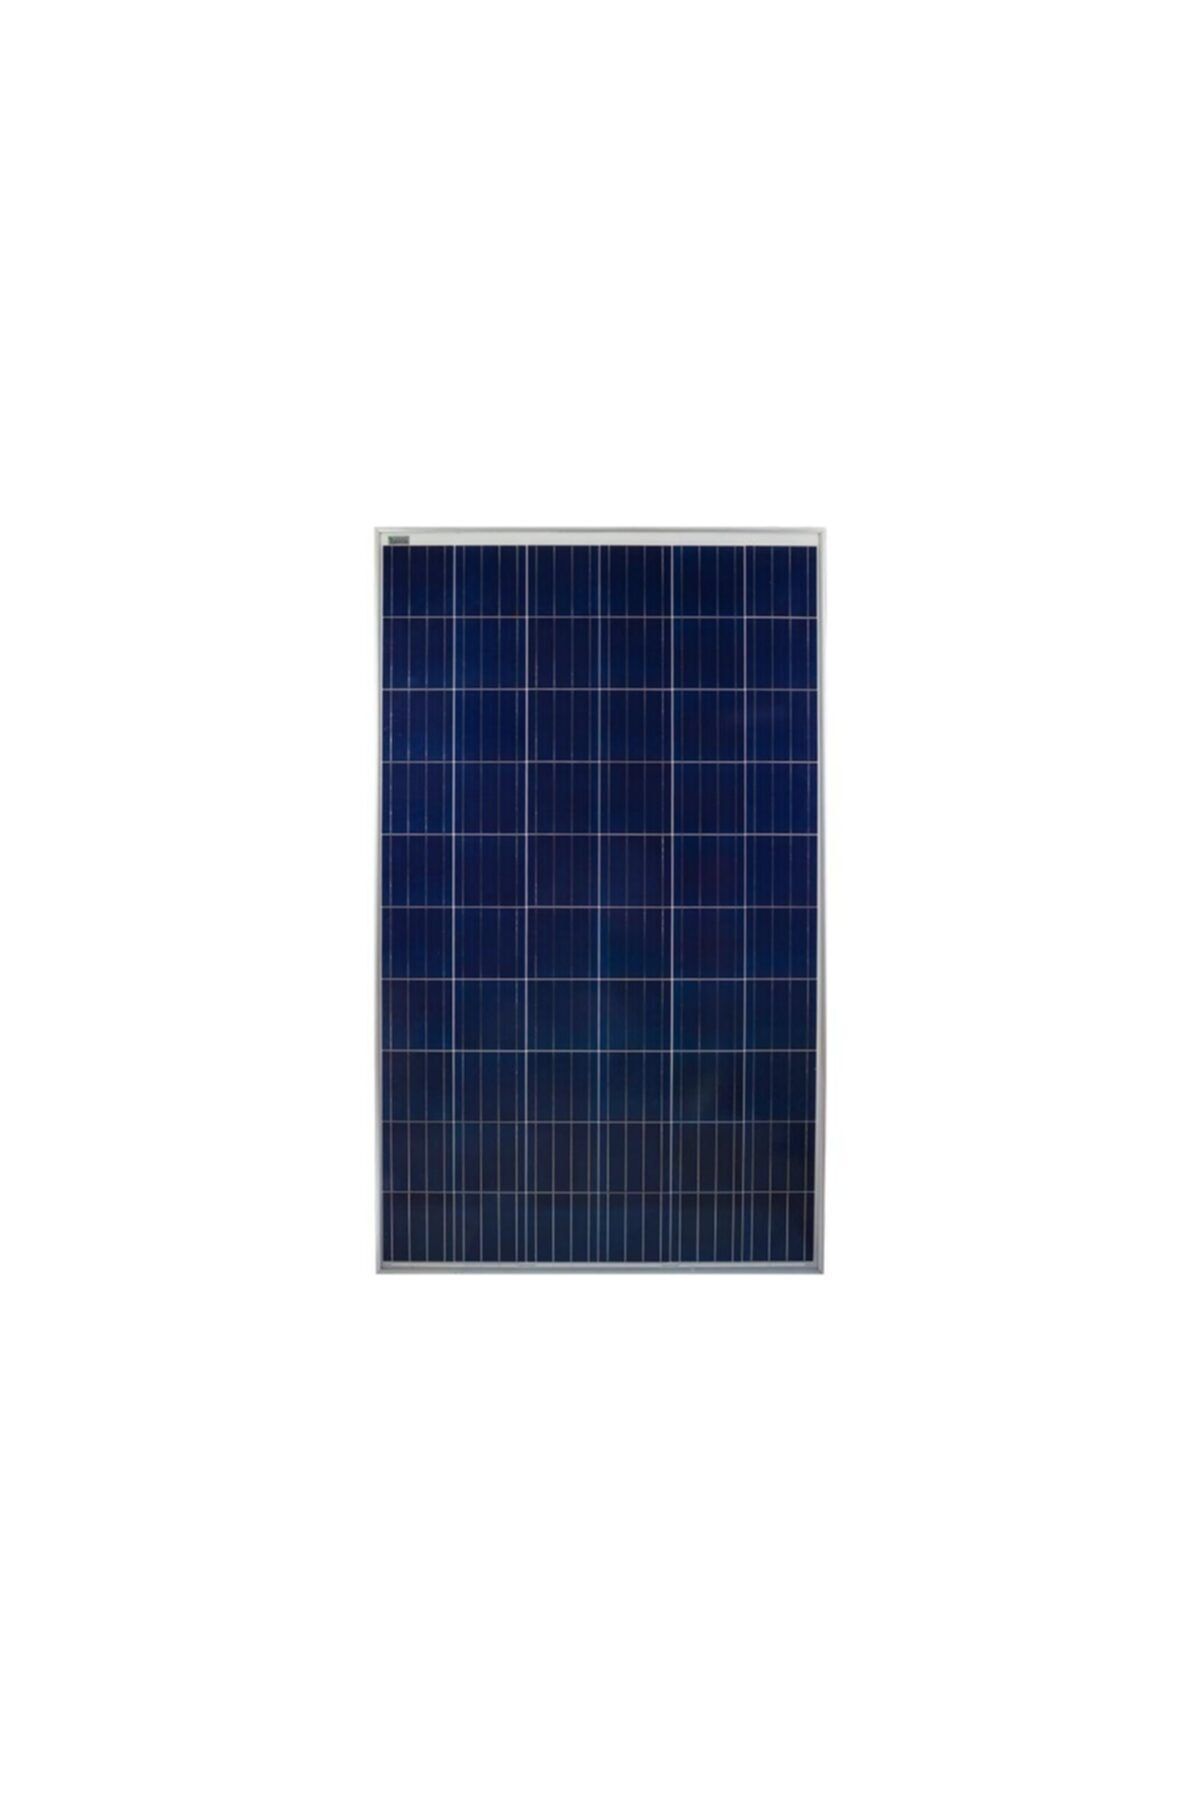 Gesper Enerji Gesper 285 Watt Polikristal Güneş Paneli